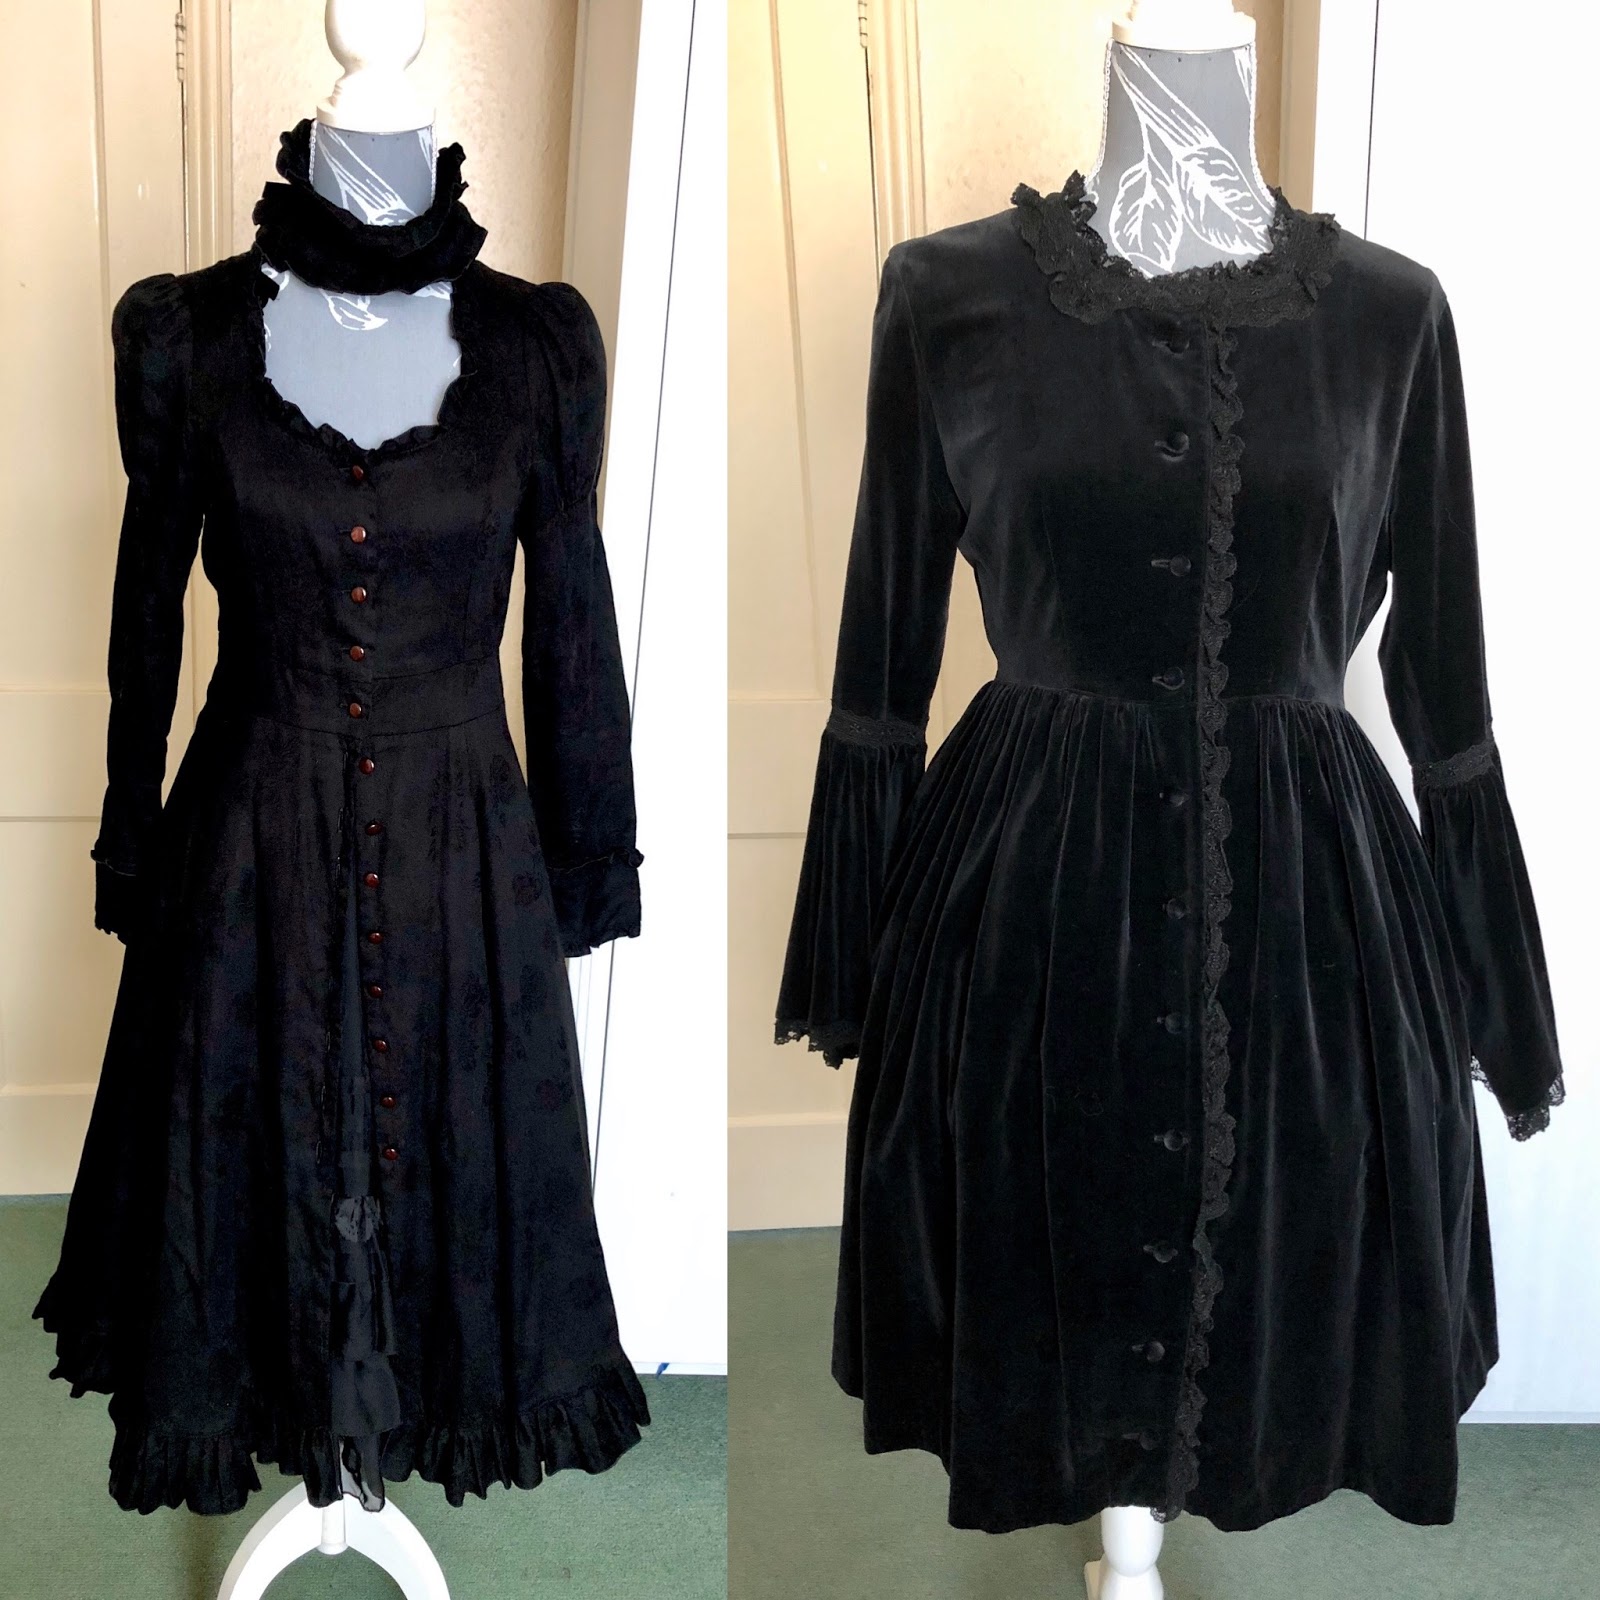 Lace Alchemist: My gothic lolita wardrobe 2020 edition